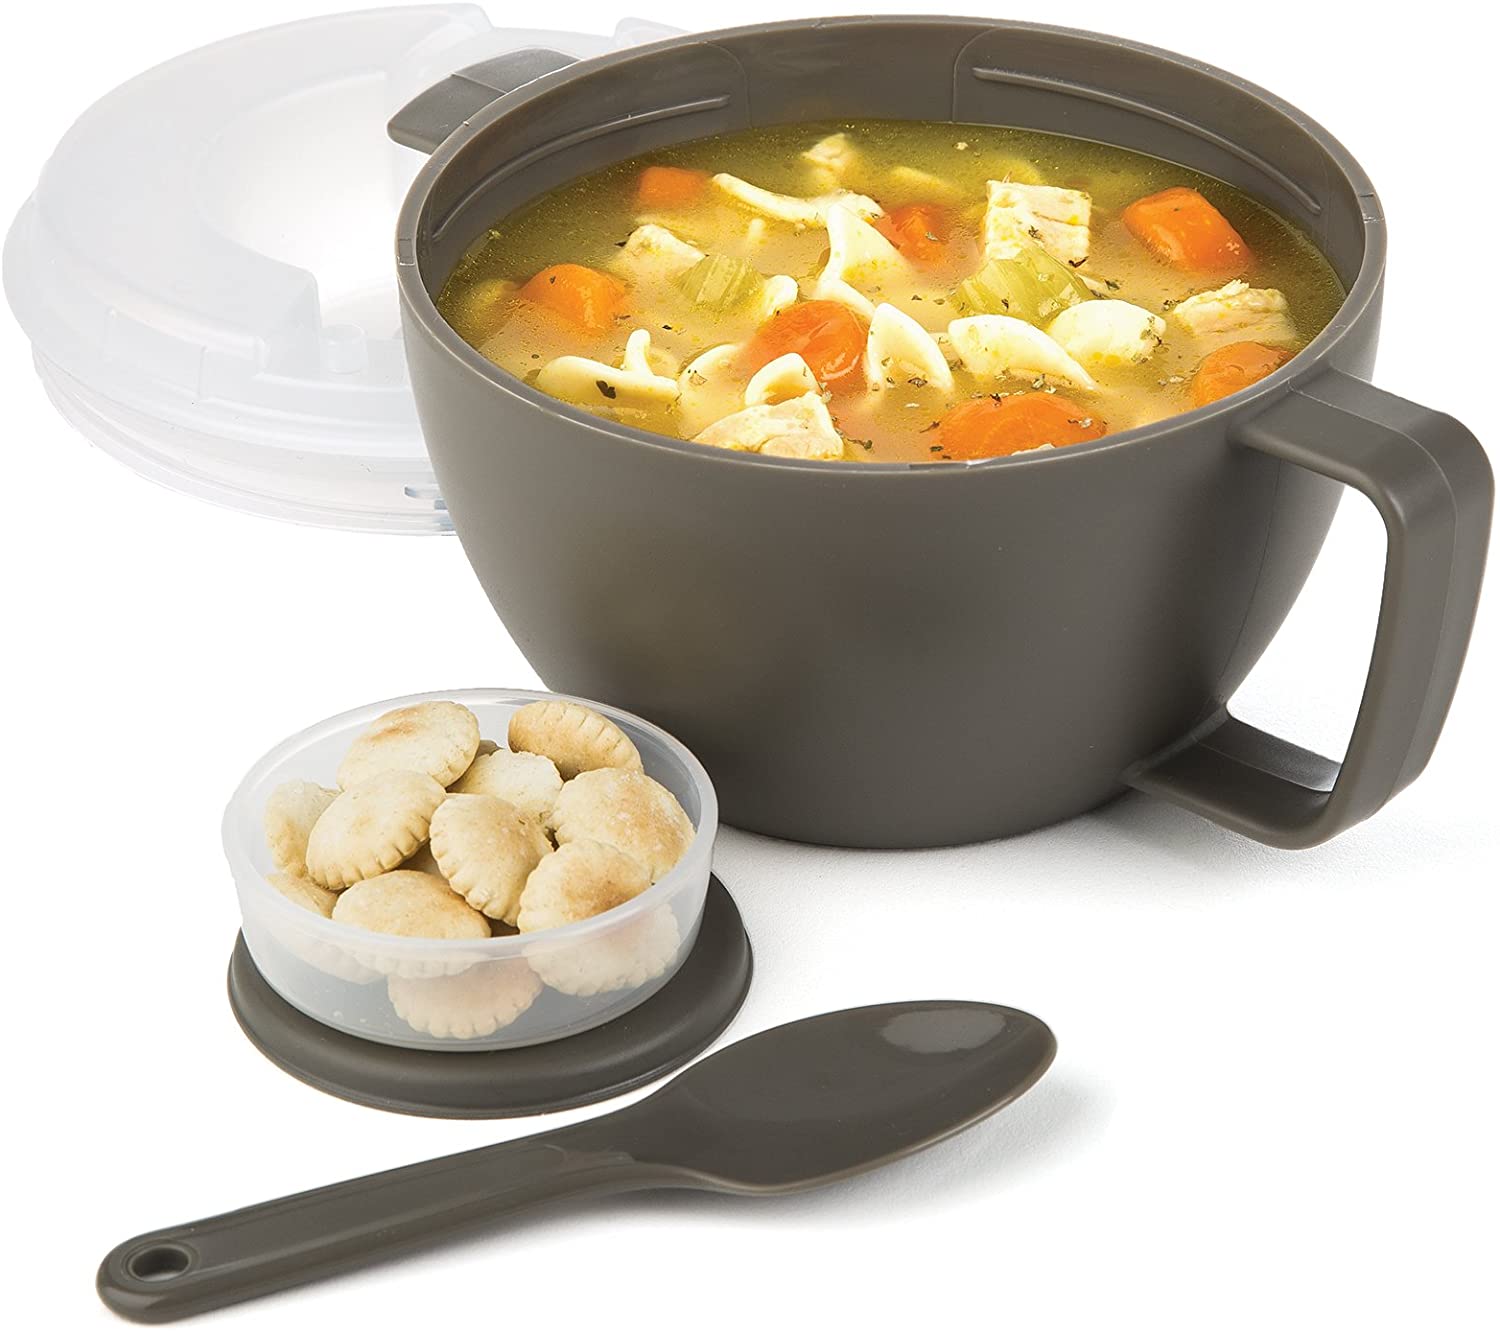 https://www.dontwasteyourmoney.com/wp-content/uploads/2020/05/prep-solutions-on-the-go-soup-bowl-soup-bowl.jpg